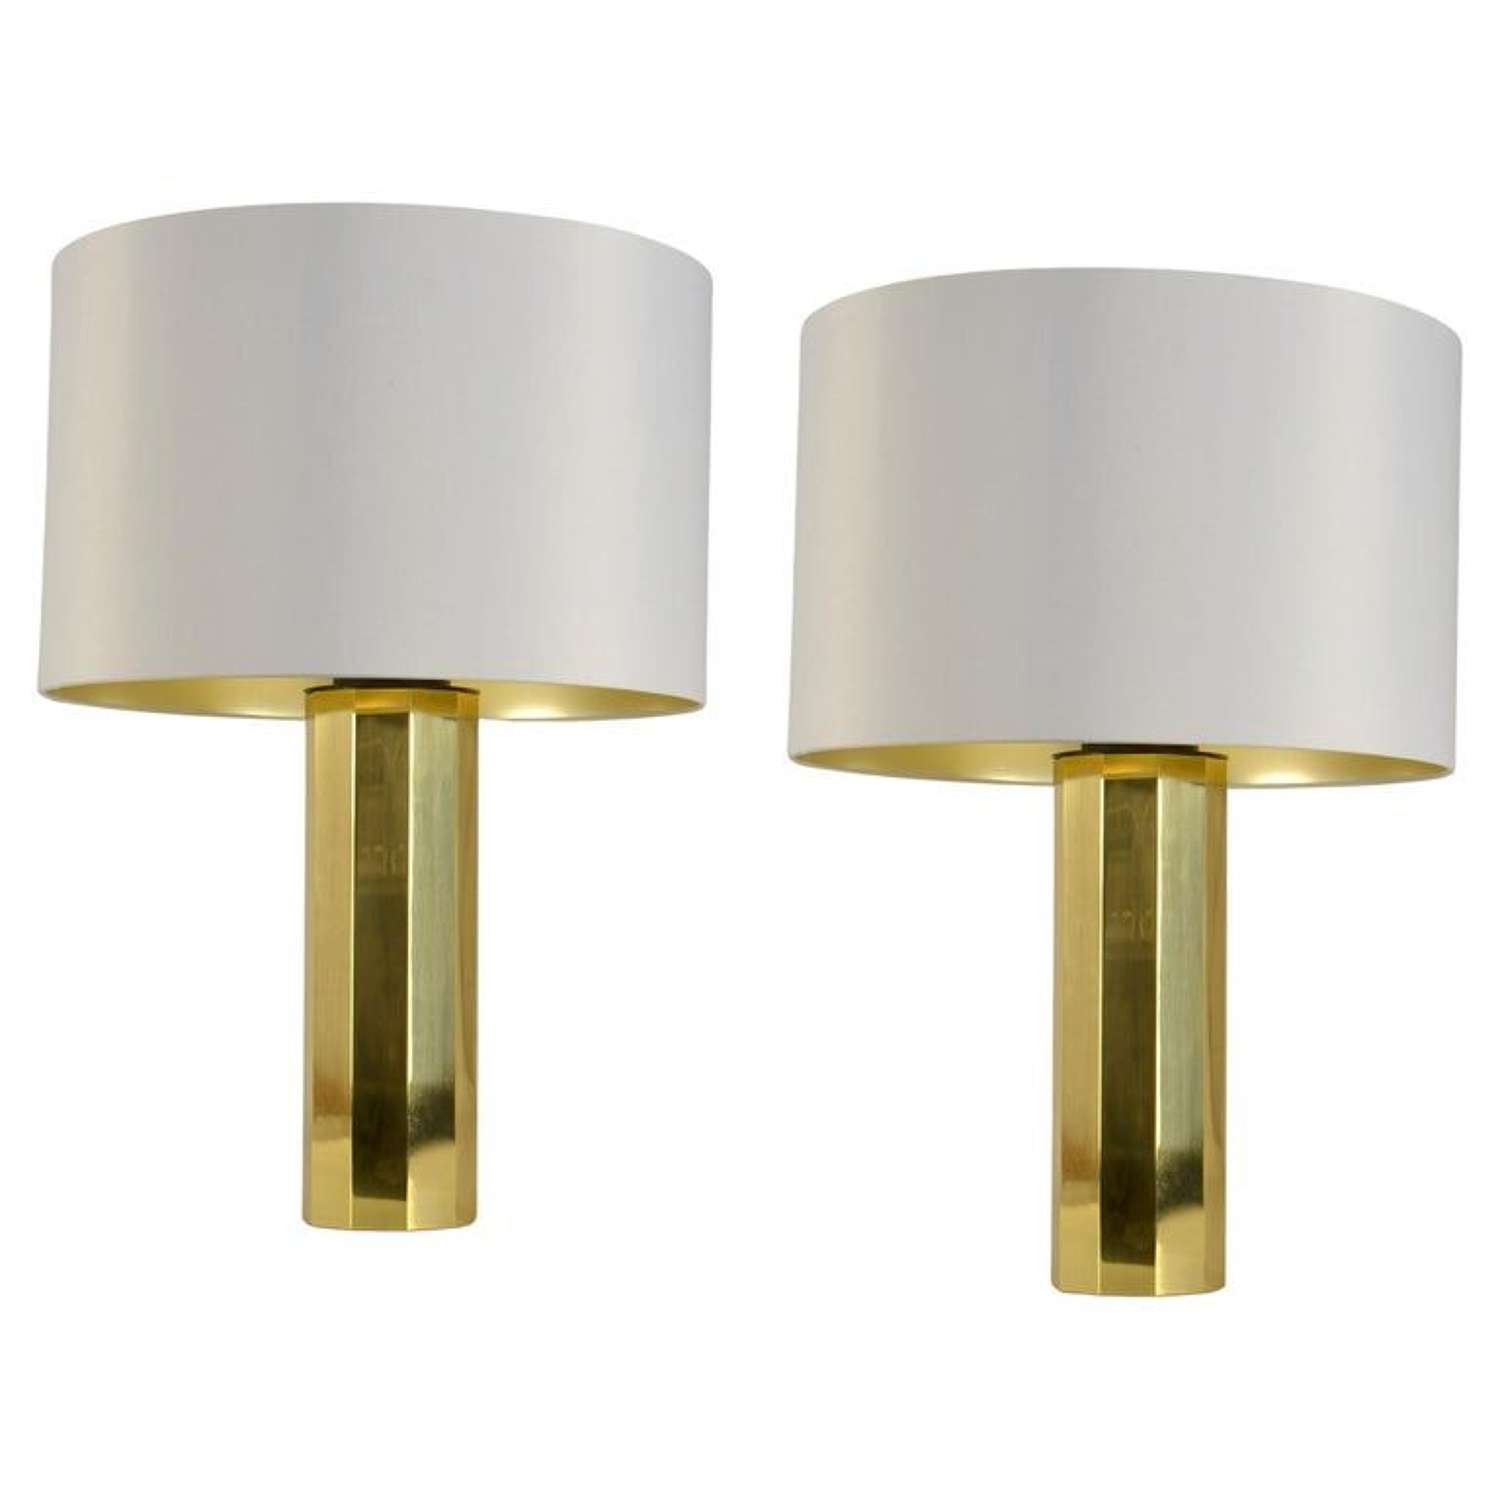 Pair of Tall Minimalist Octagonal Brass Table Lamps